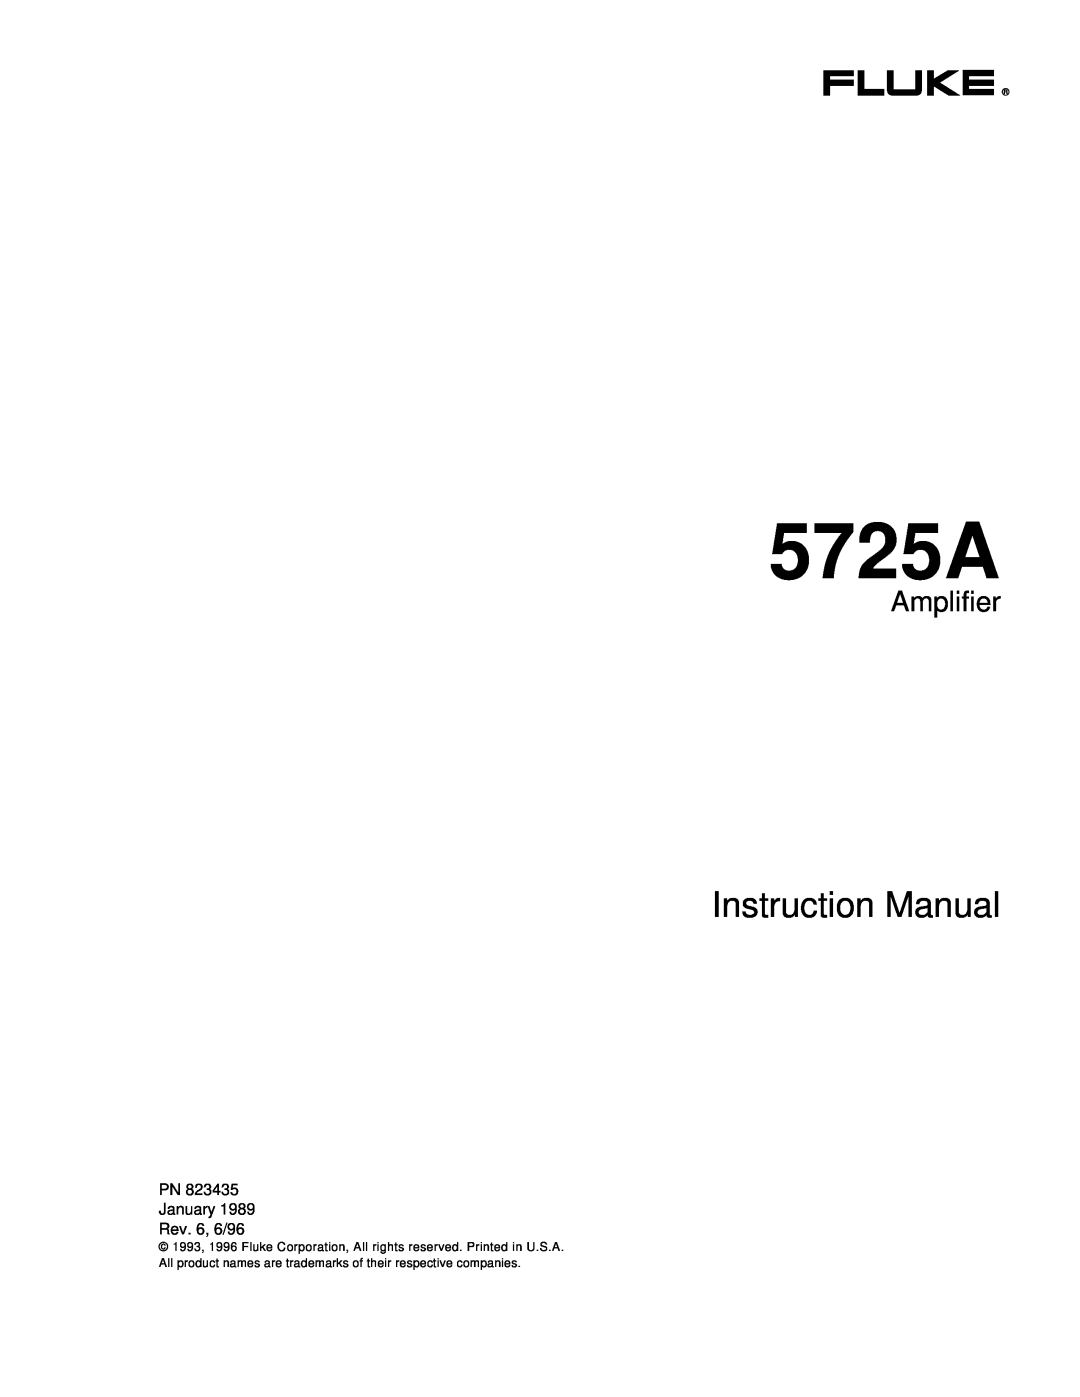 Fluke 5725A instruction manual Instruction Manual, Amplifier 